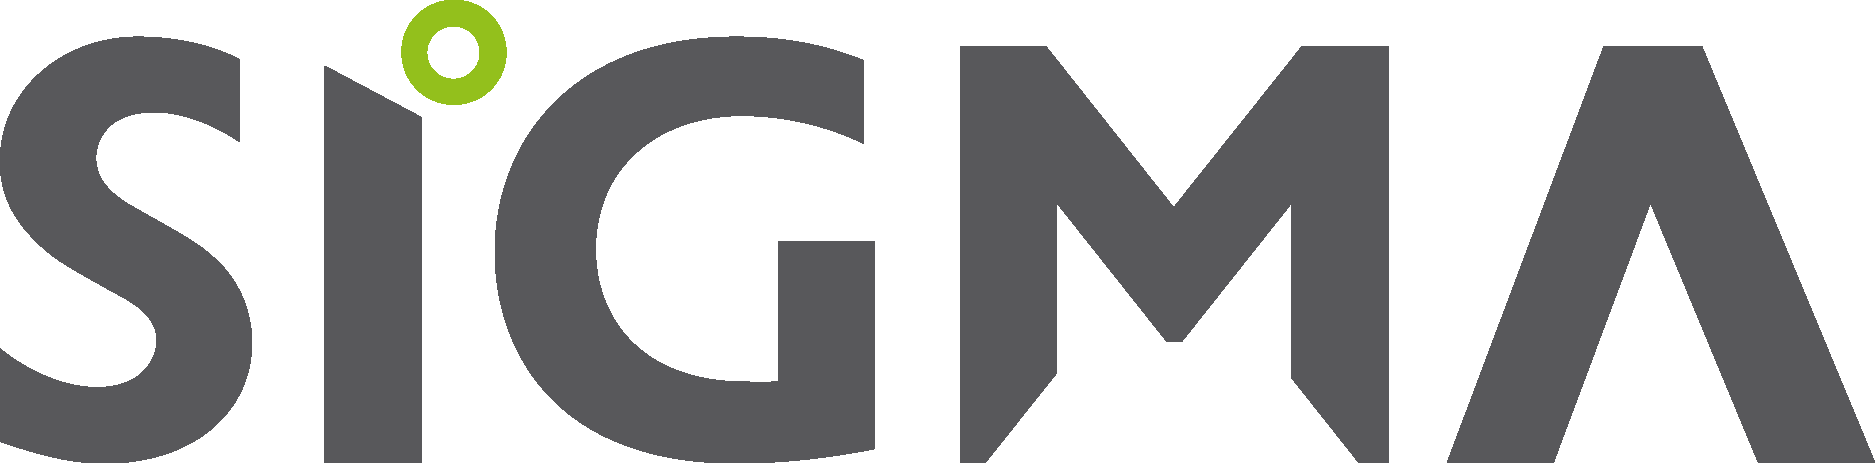 Sigma лого. Логотип Sigma Corporation. Сигмакс логотип. Sigma Oil лого.